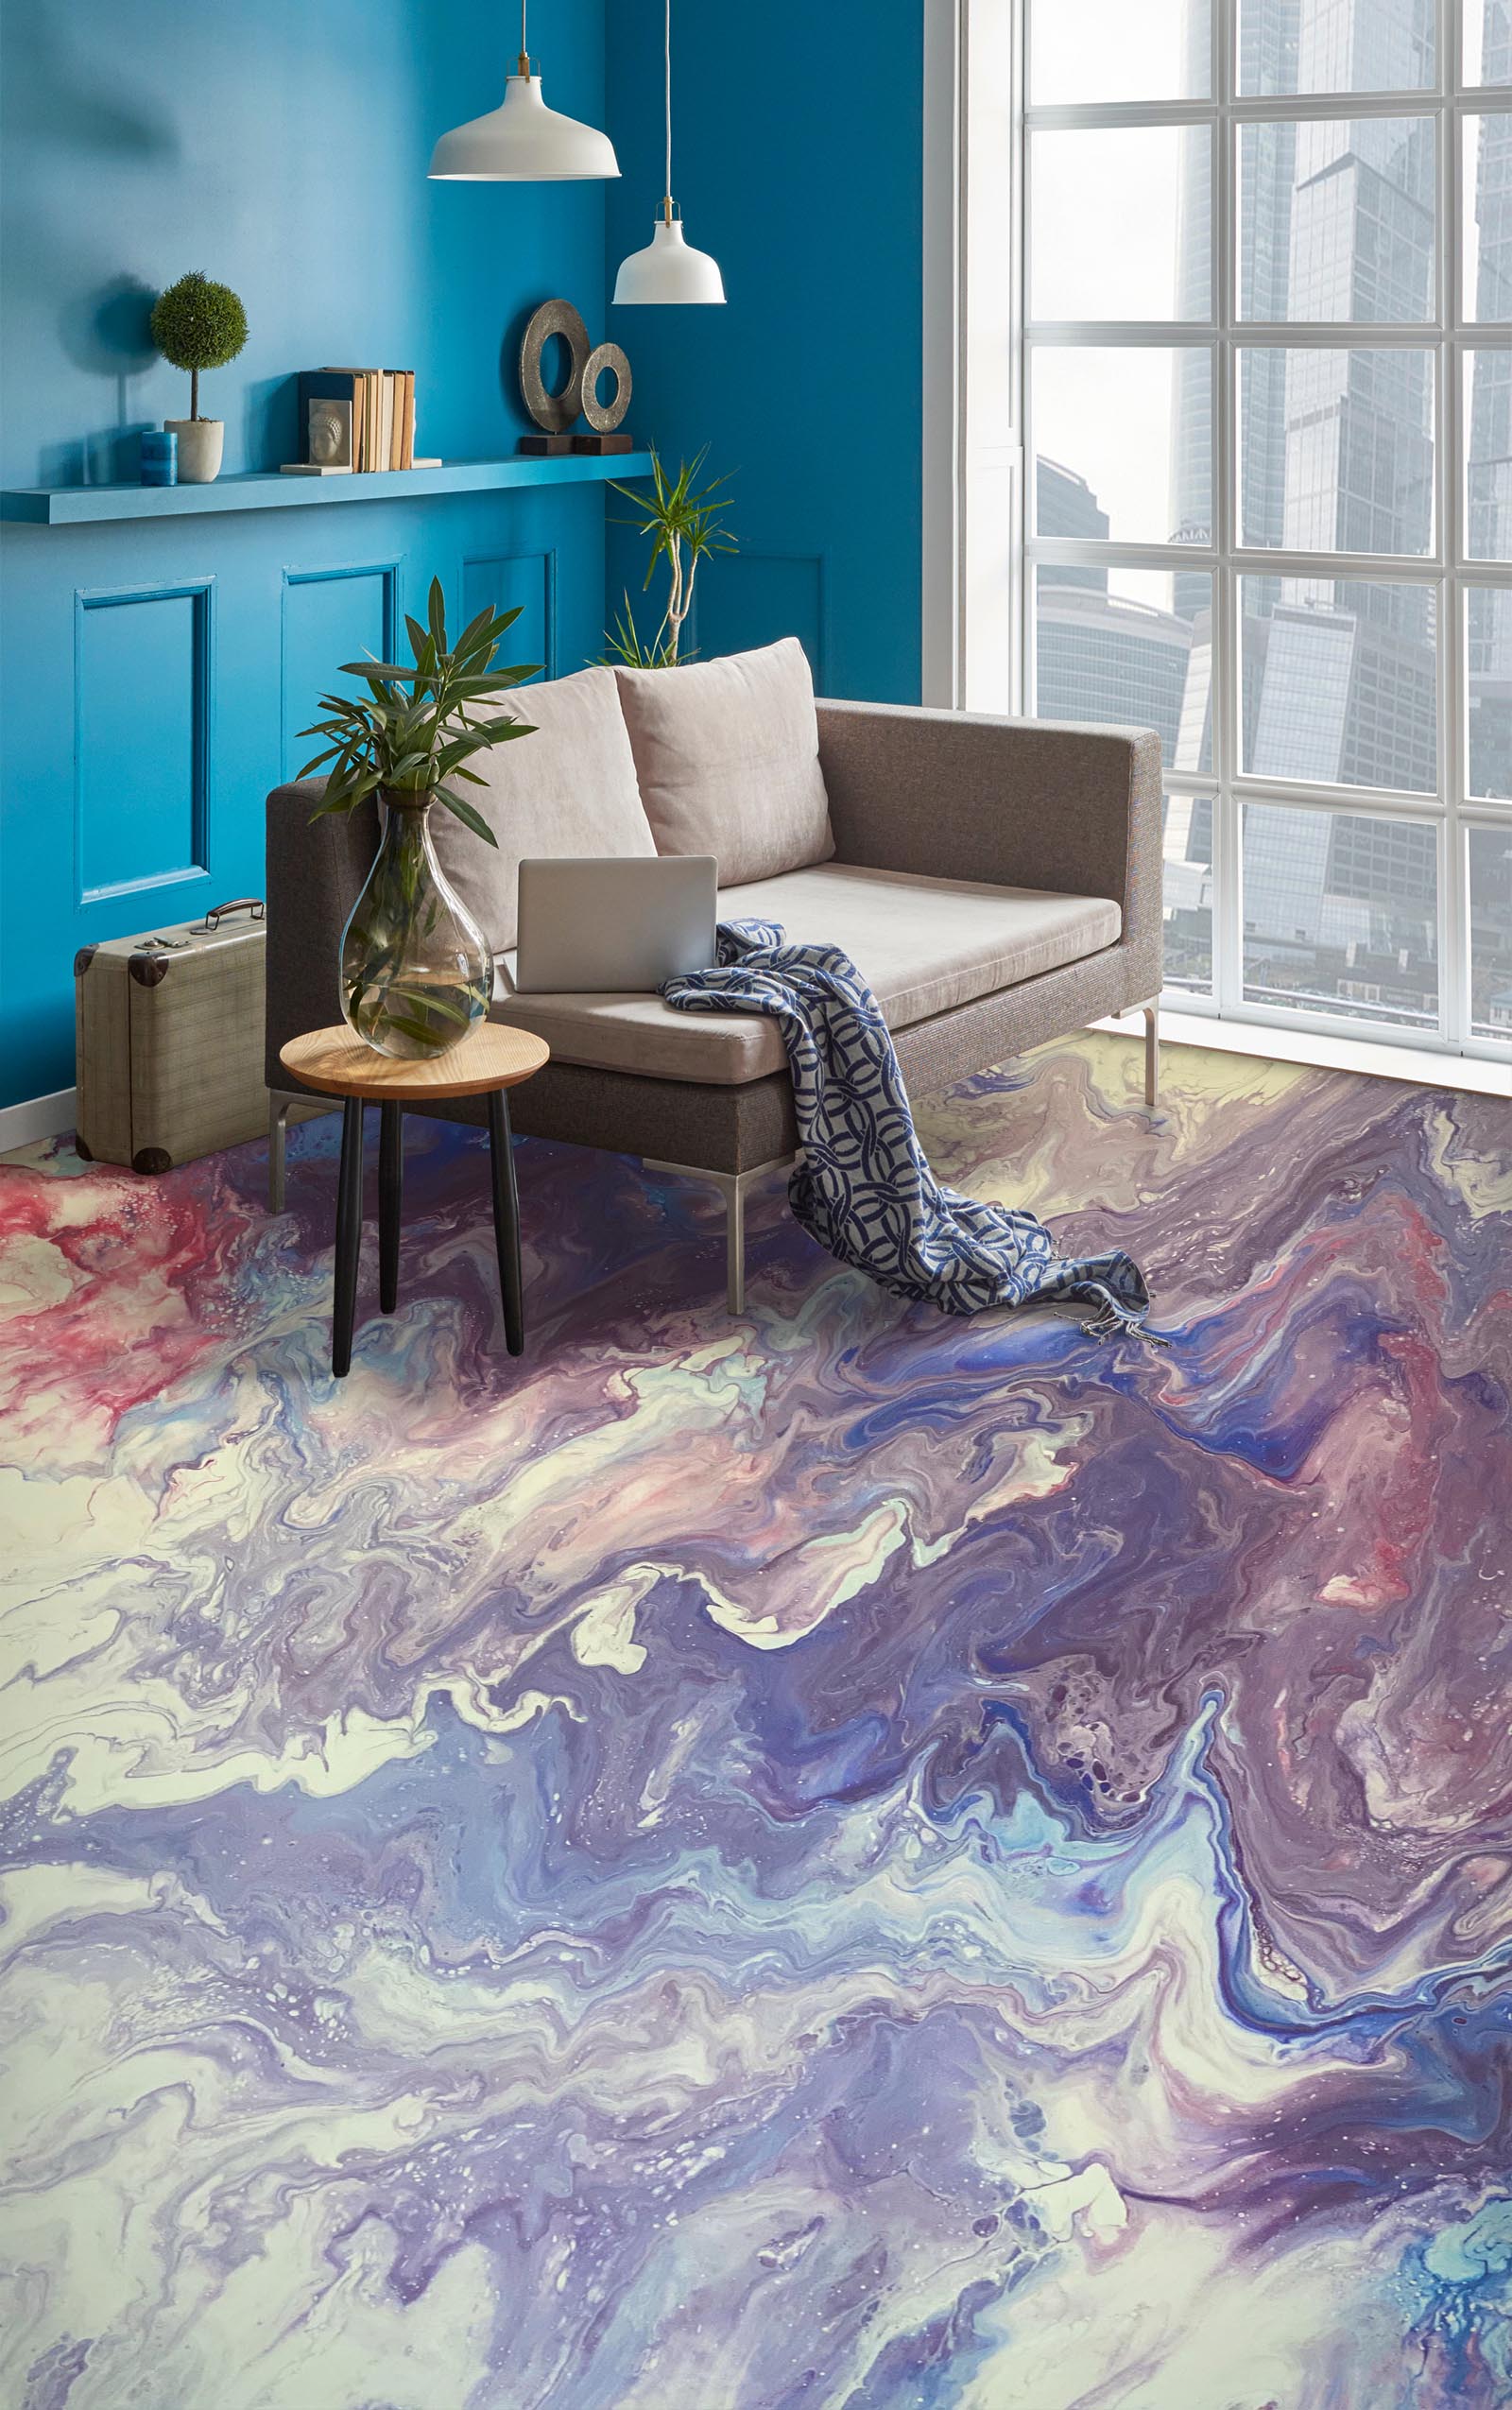 3D Purple Blue Paint Texture 98204 Valerie Latrice Floor Mural  Wallpaper Murals Self-Adhesive Removable Print Epoxy